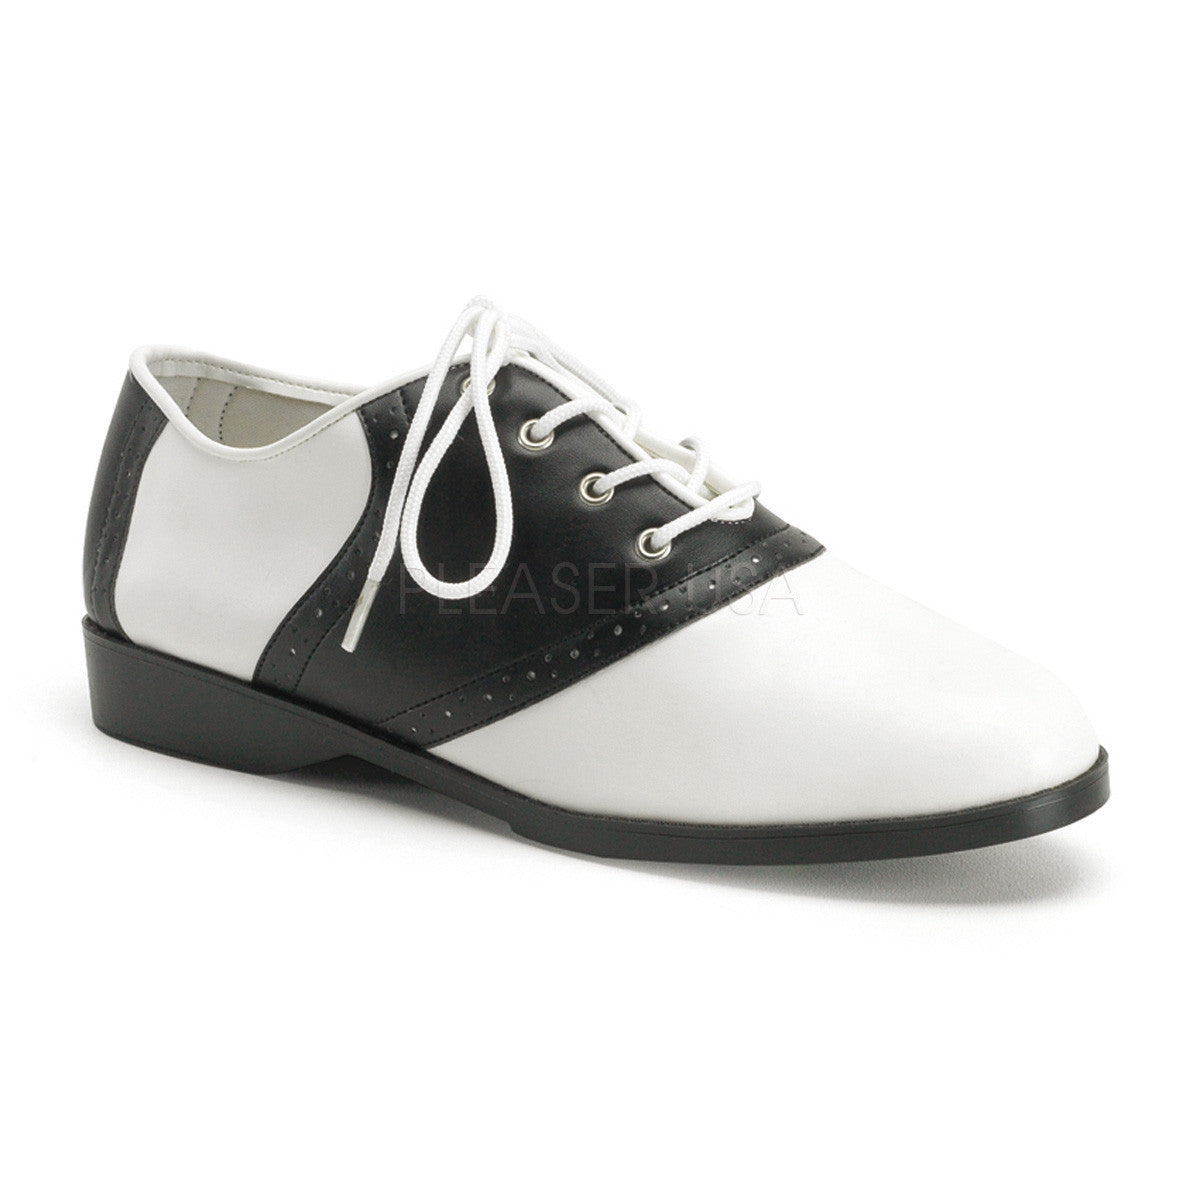 FUNTASMA SADDLE-50 Black-White Pu Retro Shoes - Shoecup.com